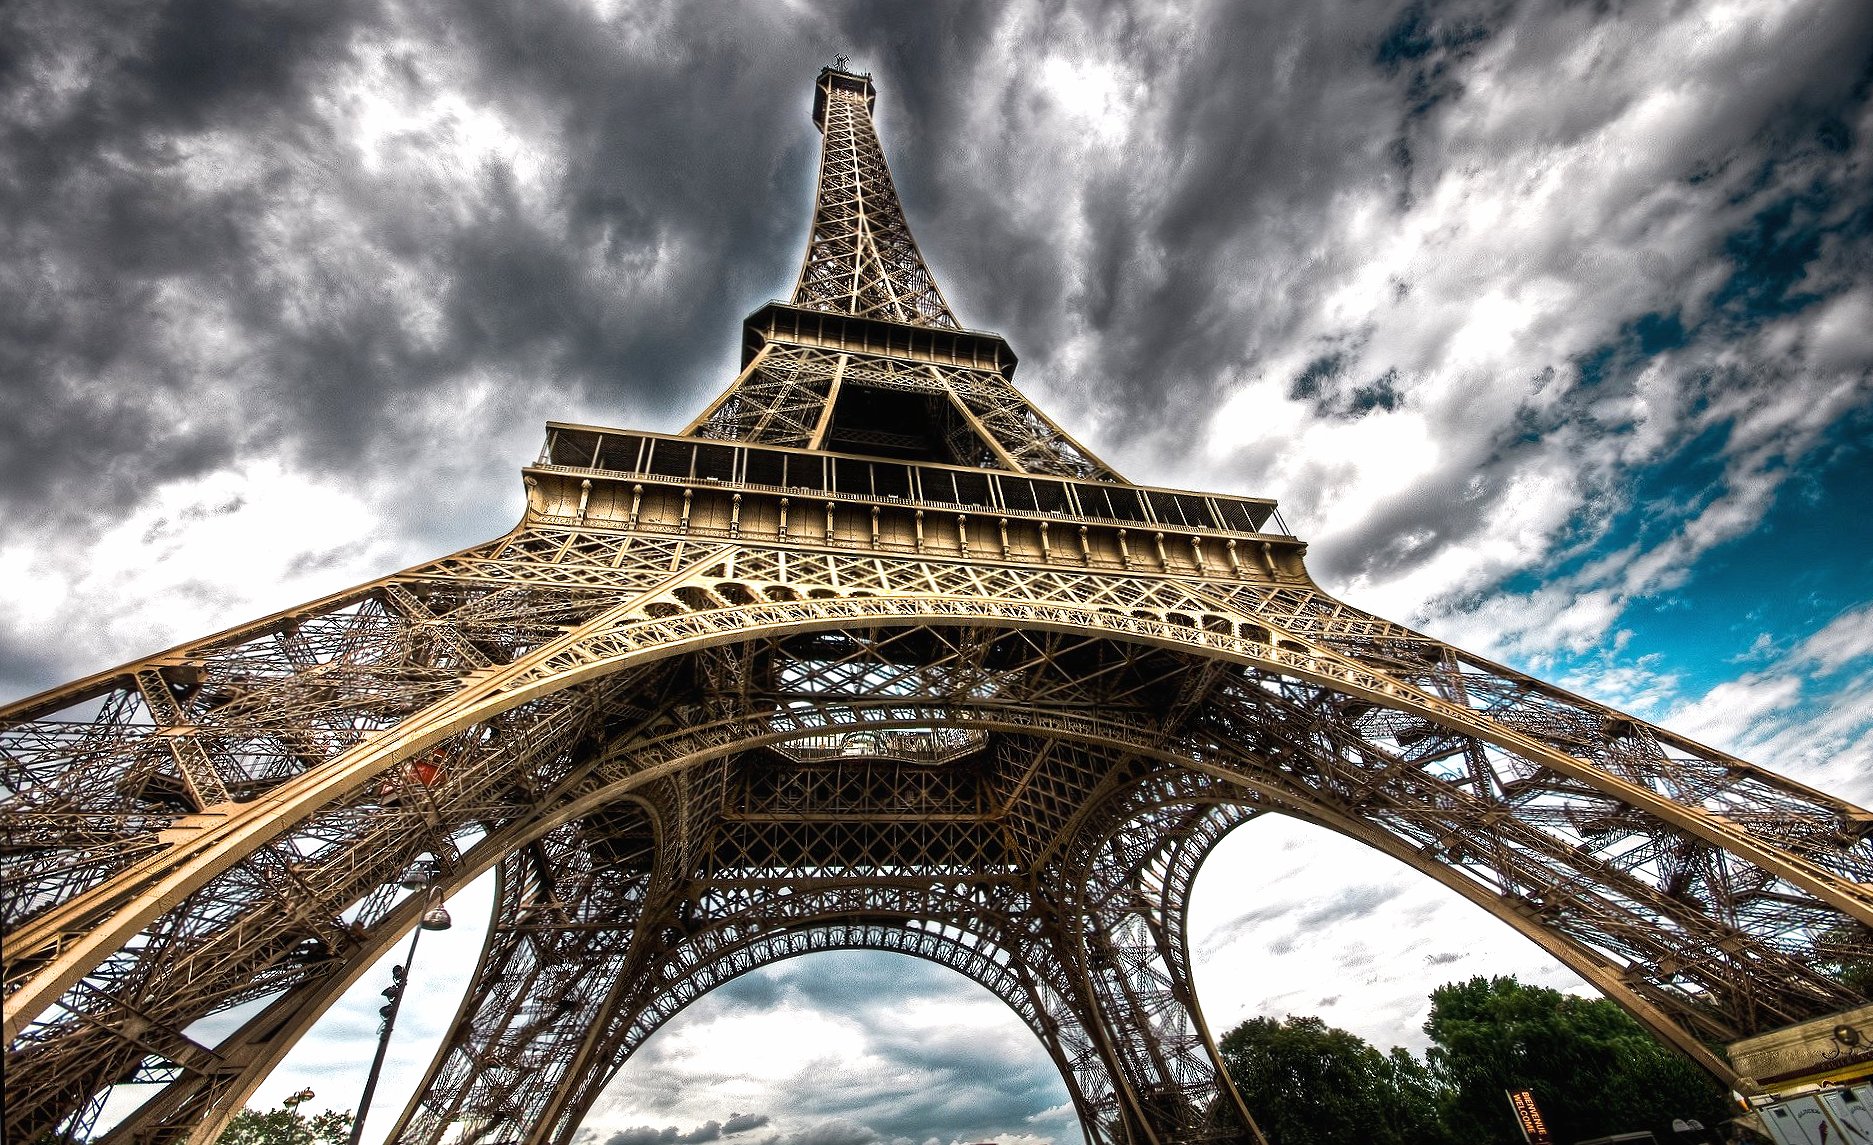 Eiffel tour paris at 640 x 1136 iPhone 5 size wallpapers HD quality